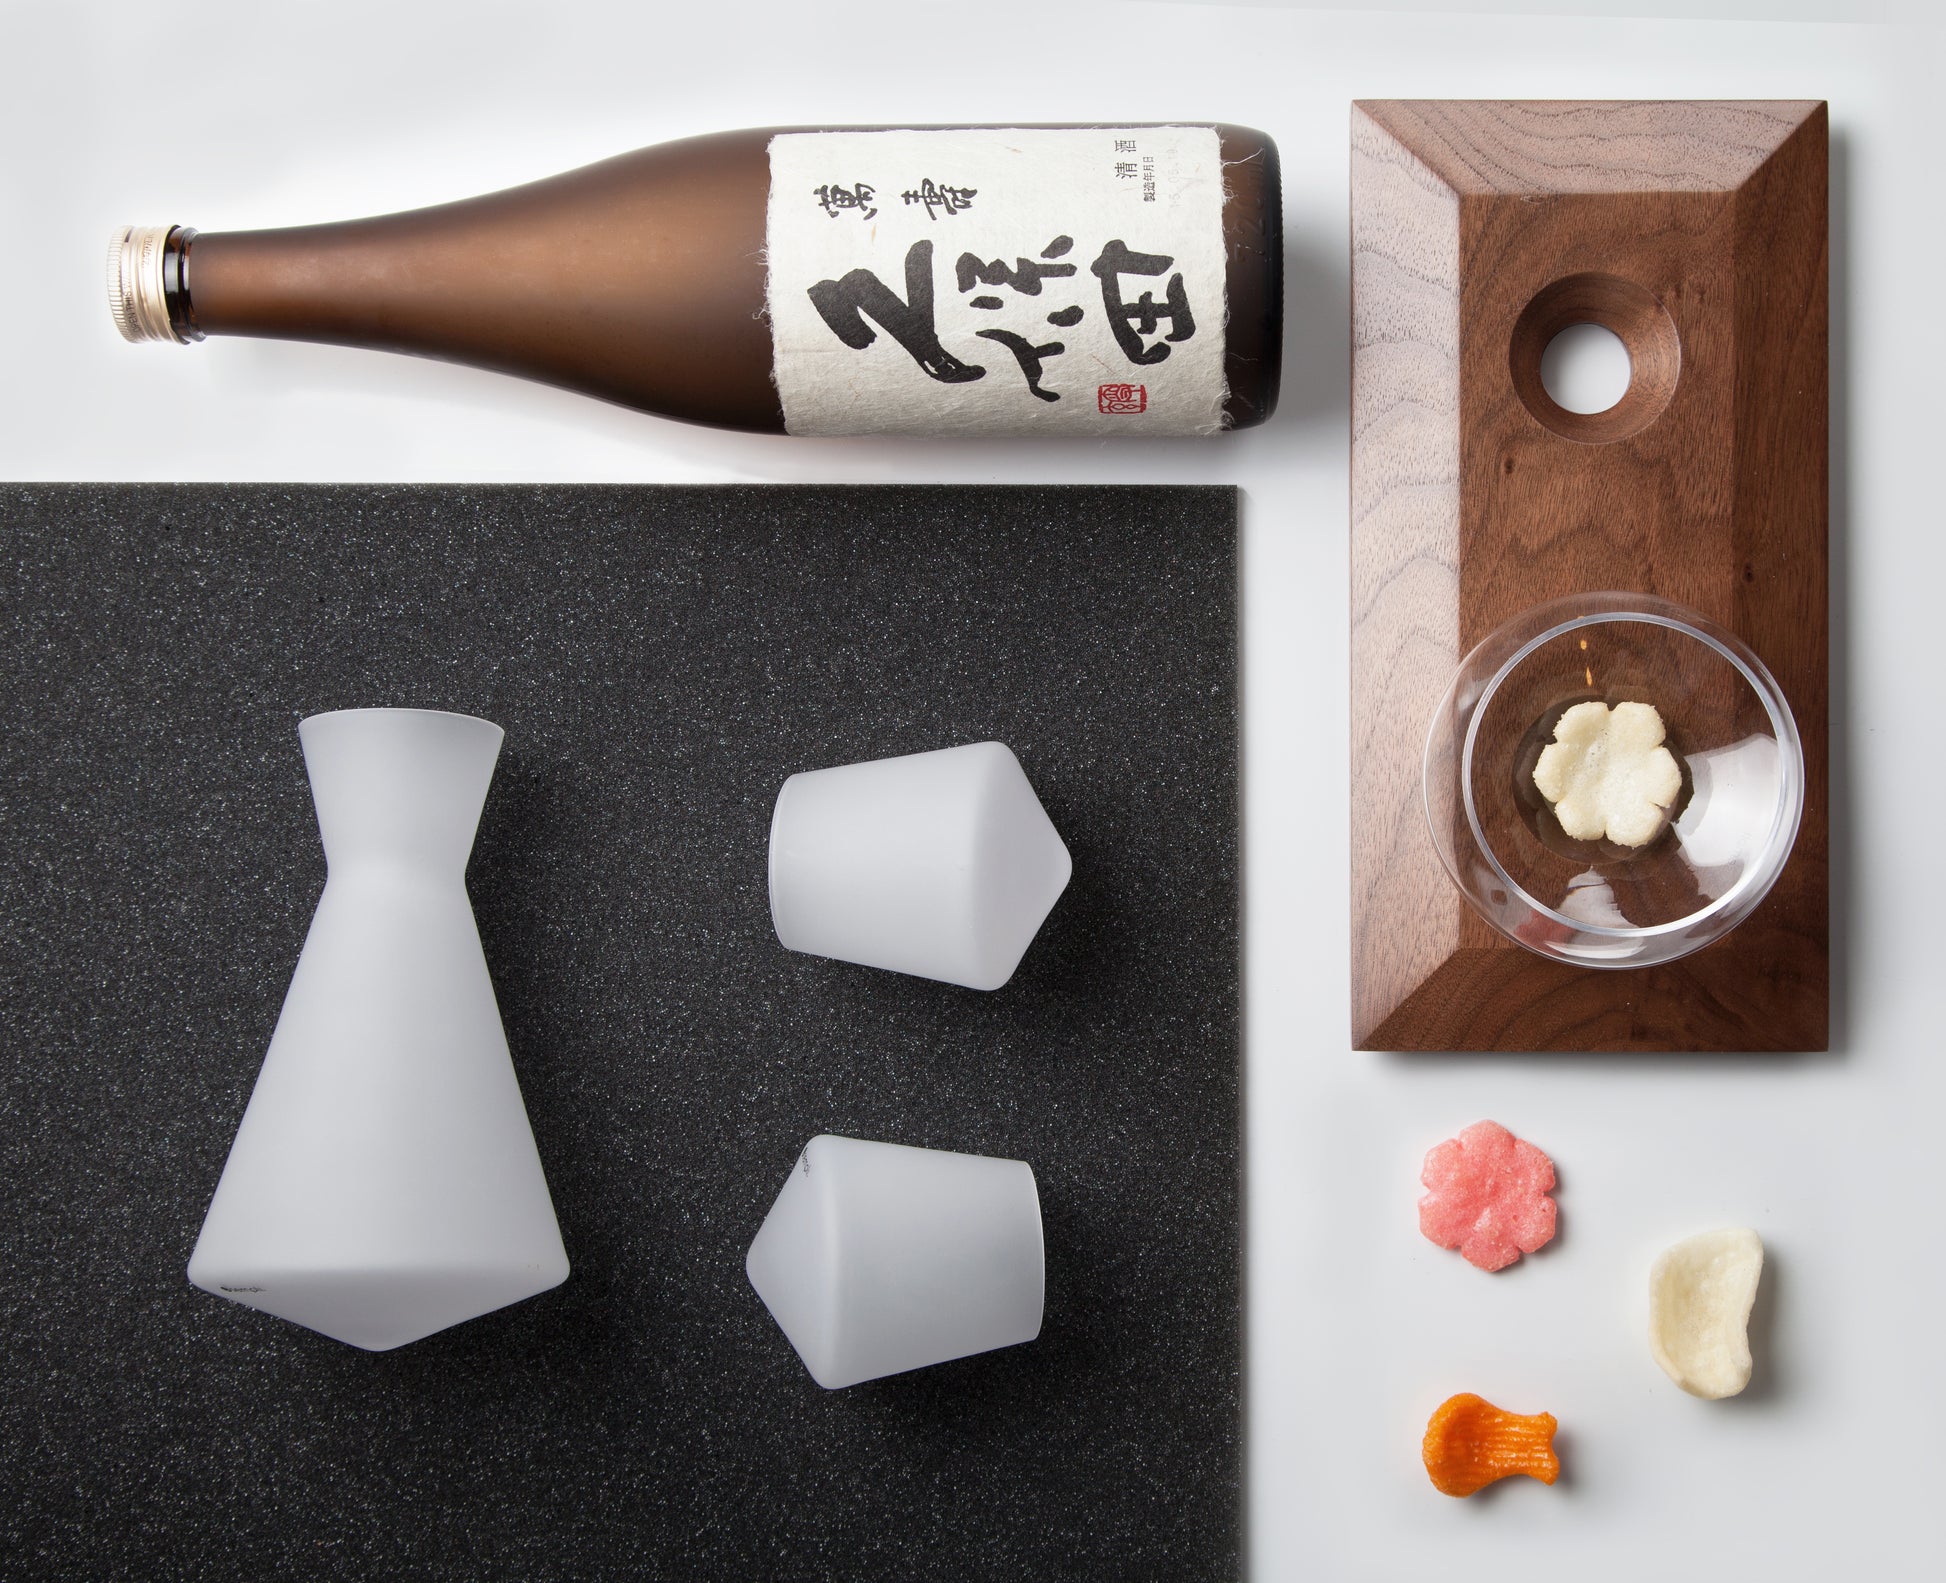 Vaso Sake Decanter and Cupa Shot Glass Set by Sempli | Luxury Glassware | Willow & Albert Home